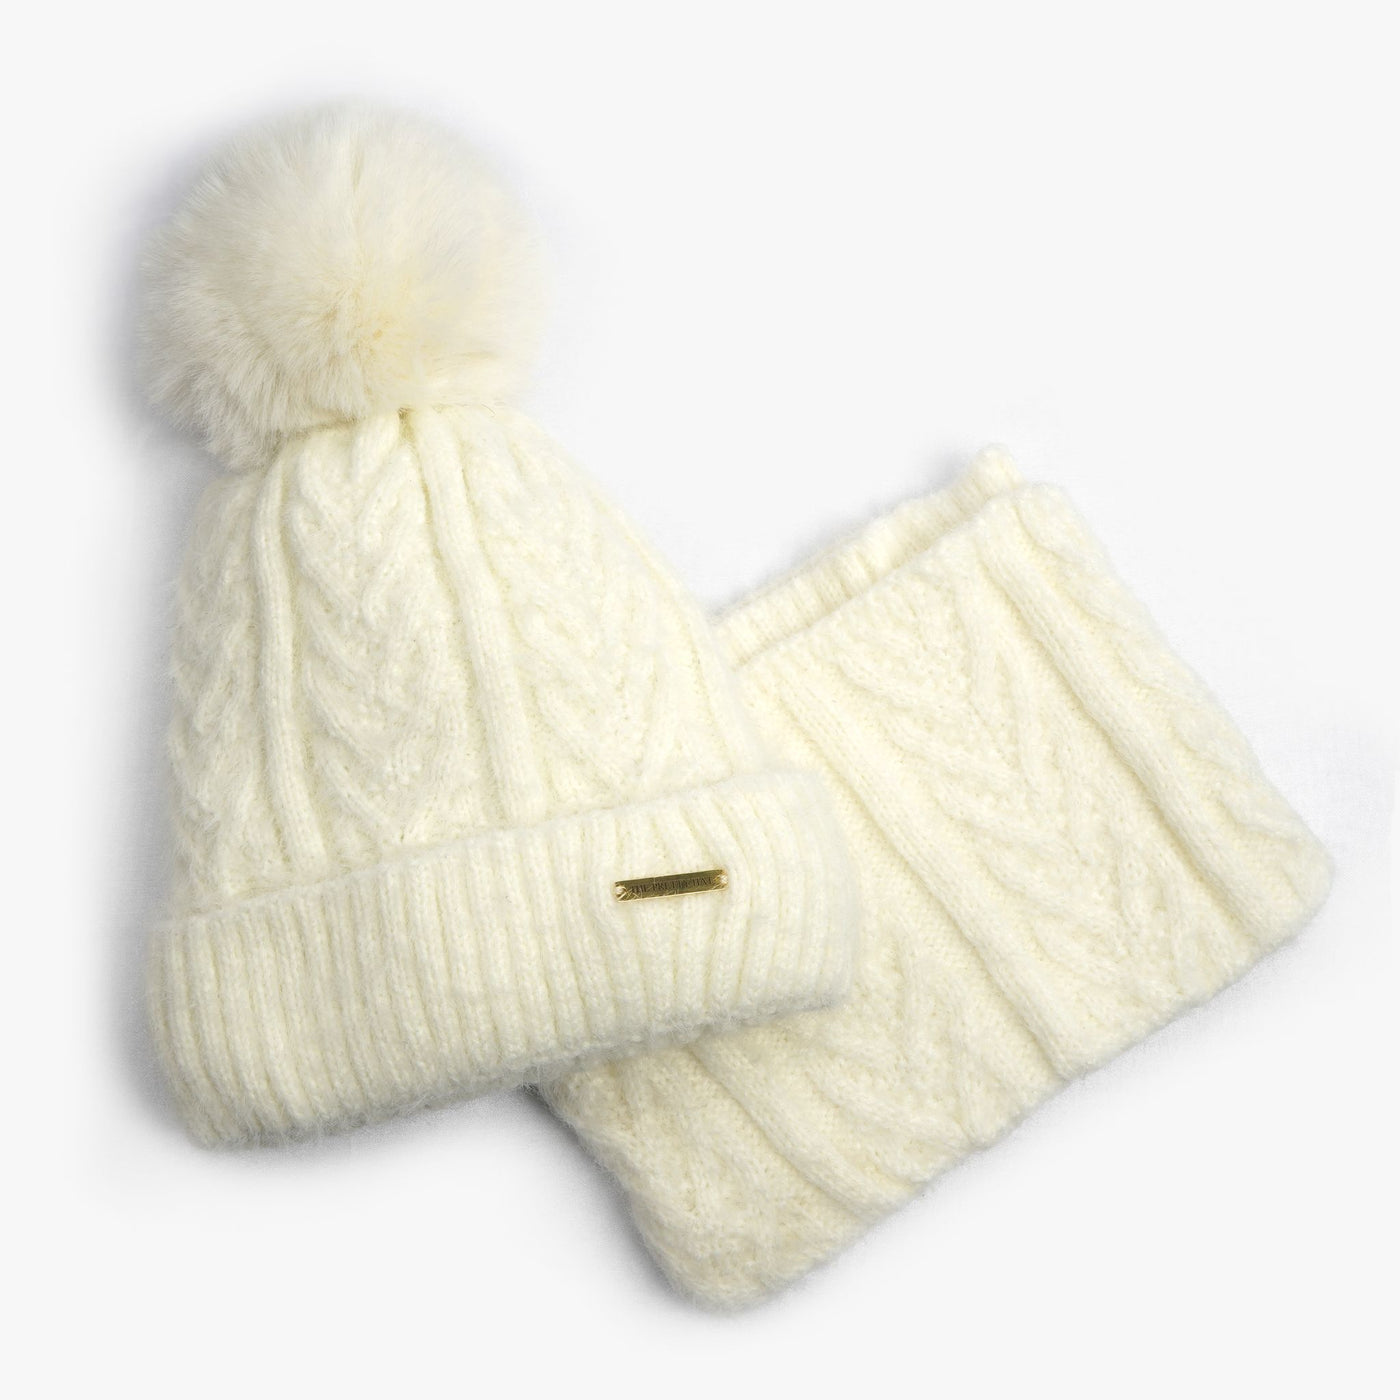 Fifi Fleece Lined Beanie & Snood Set - Alpine White - The Pretty Hat